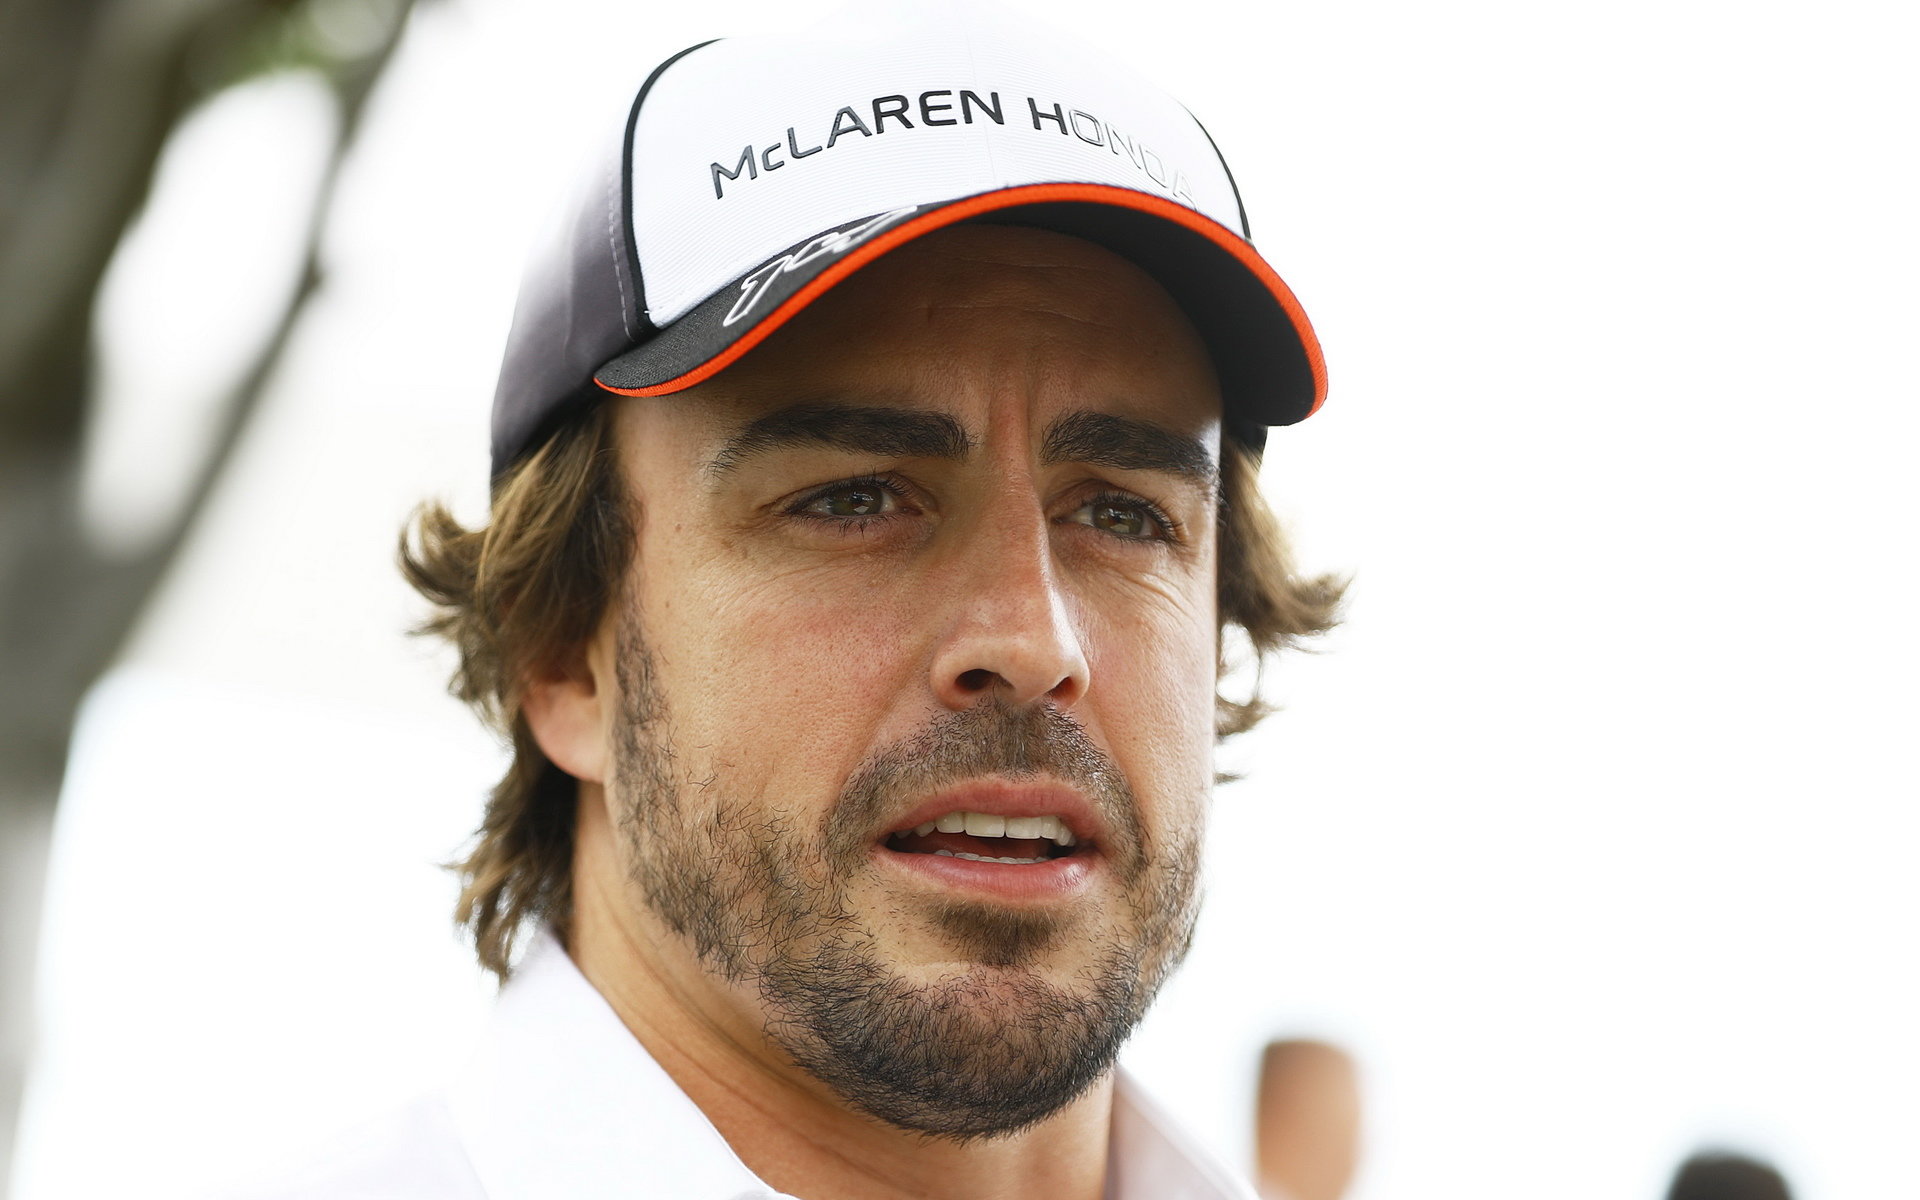 Fernando Alonso v Austrálii